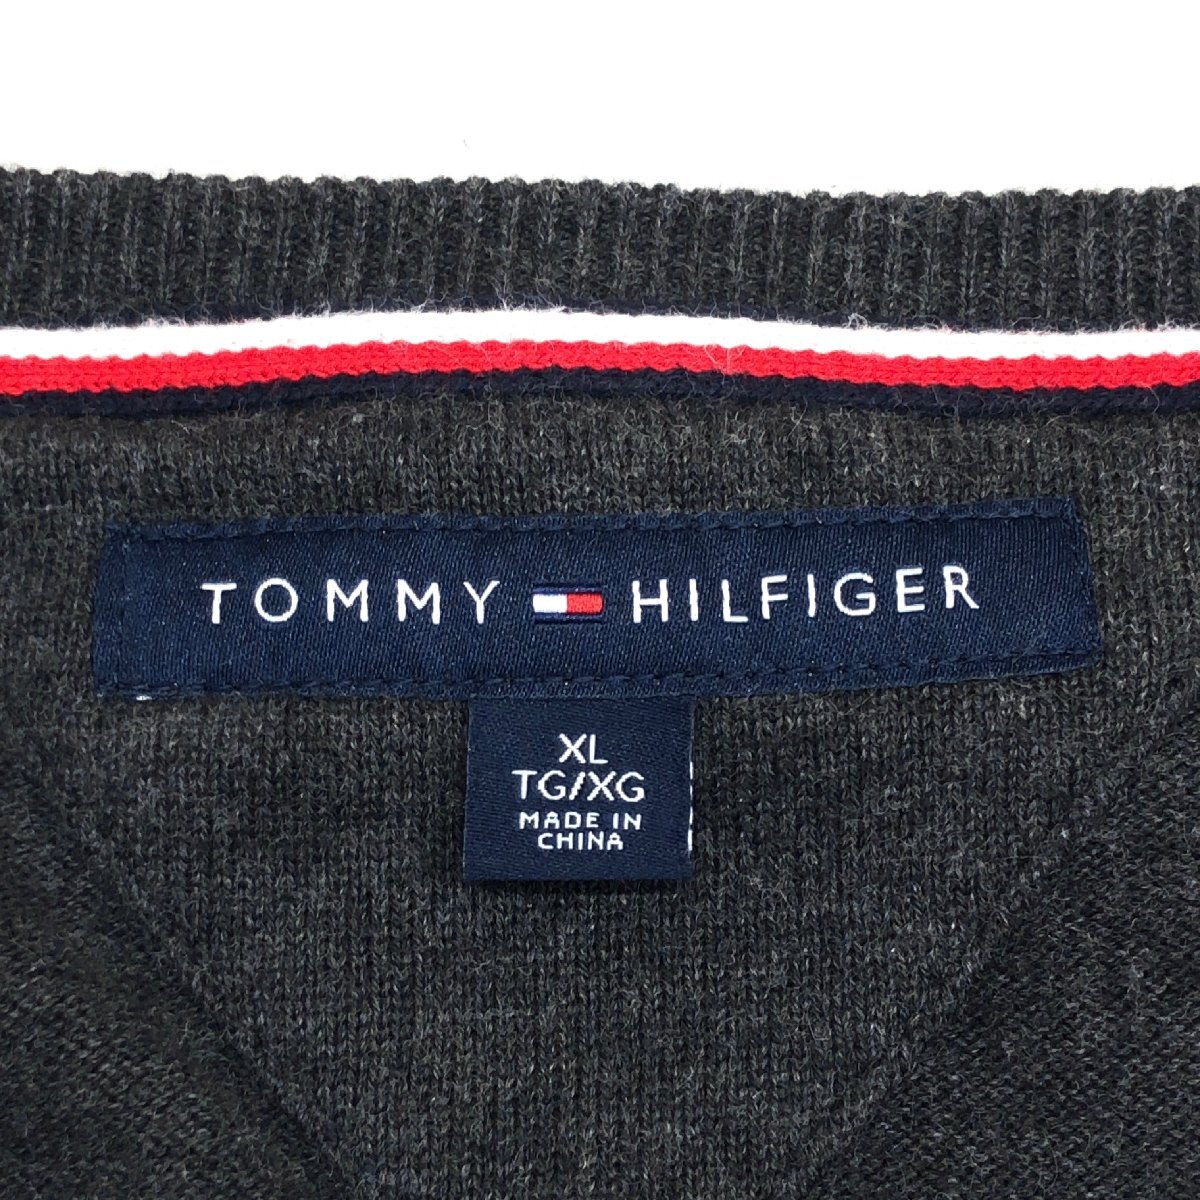 ●TOMMY HILFIGER トミーヒルフィガー ロゴ刺繍 アーガイル柄 コットン ニット セーター XL ダークグレー 2L LL 特大 大きいサイズ メンズの画像3